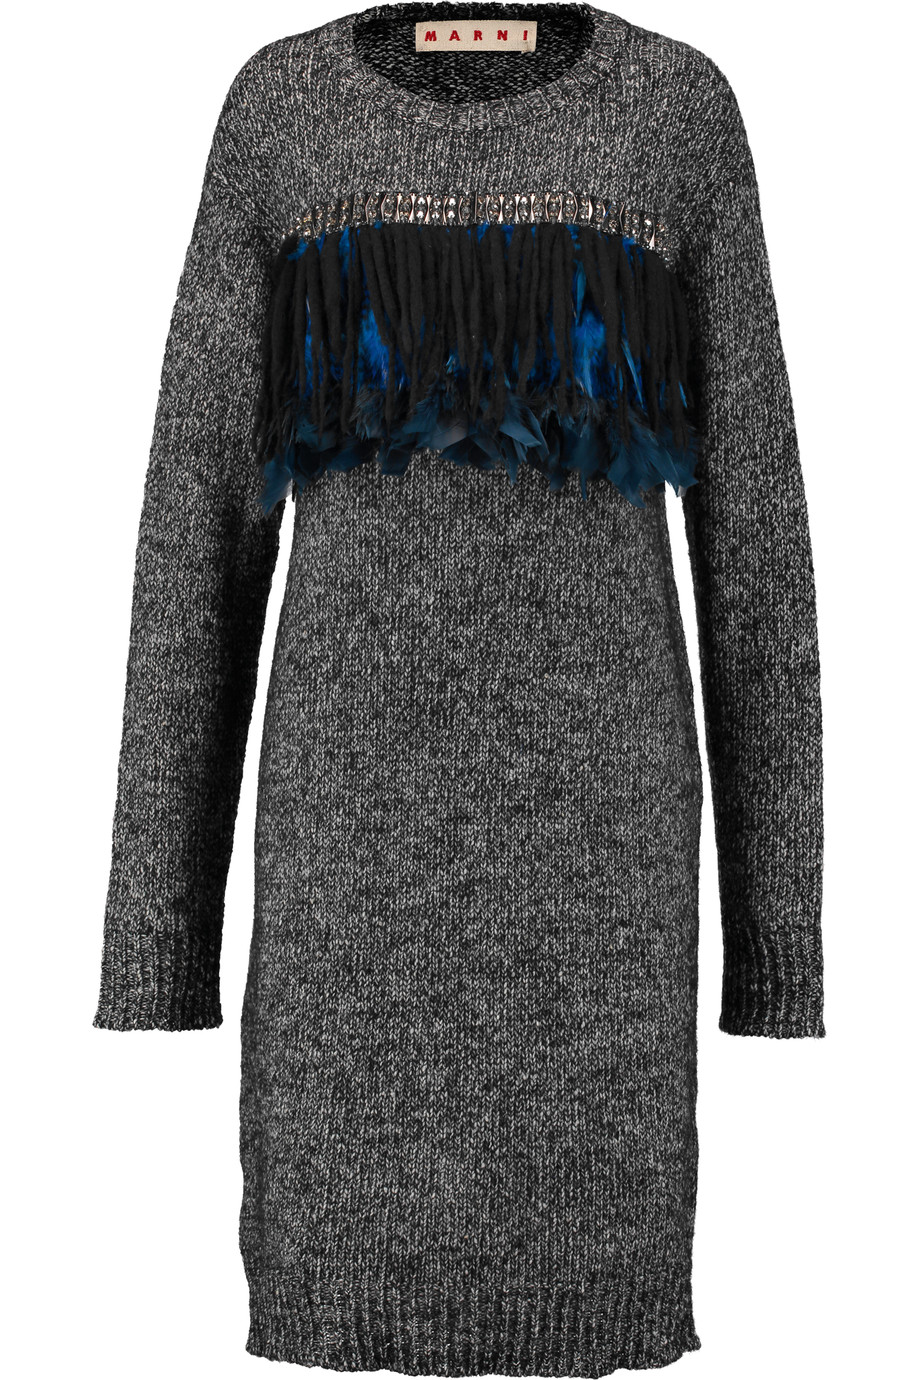 Marni Embellished Wool-blend Sweater Dress | ModeSens